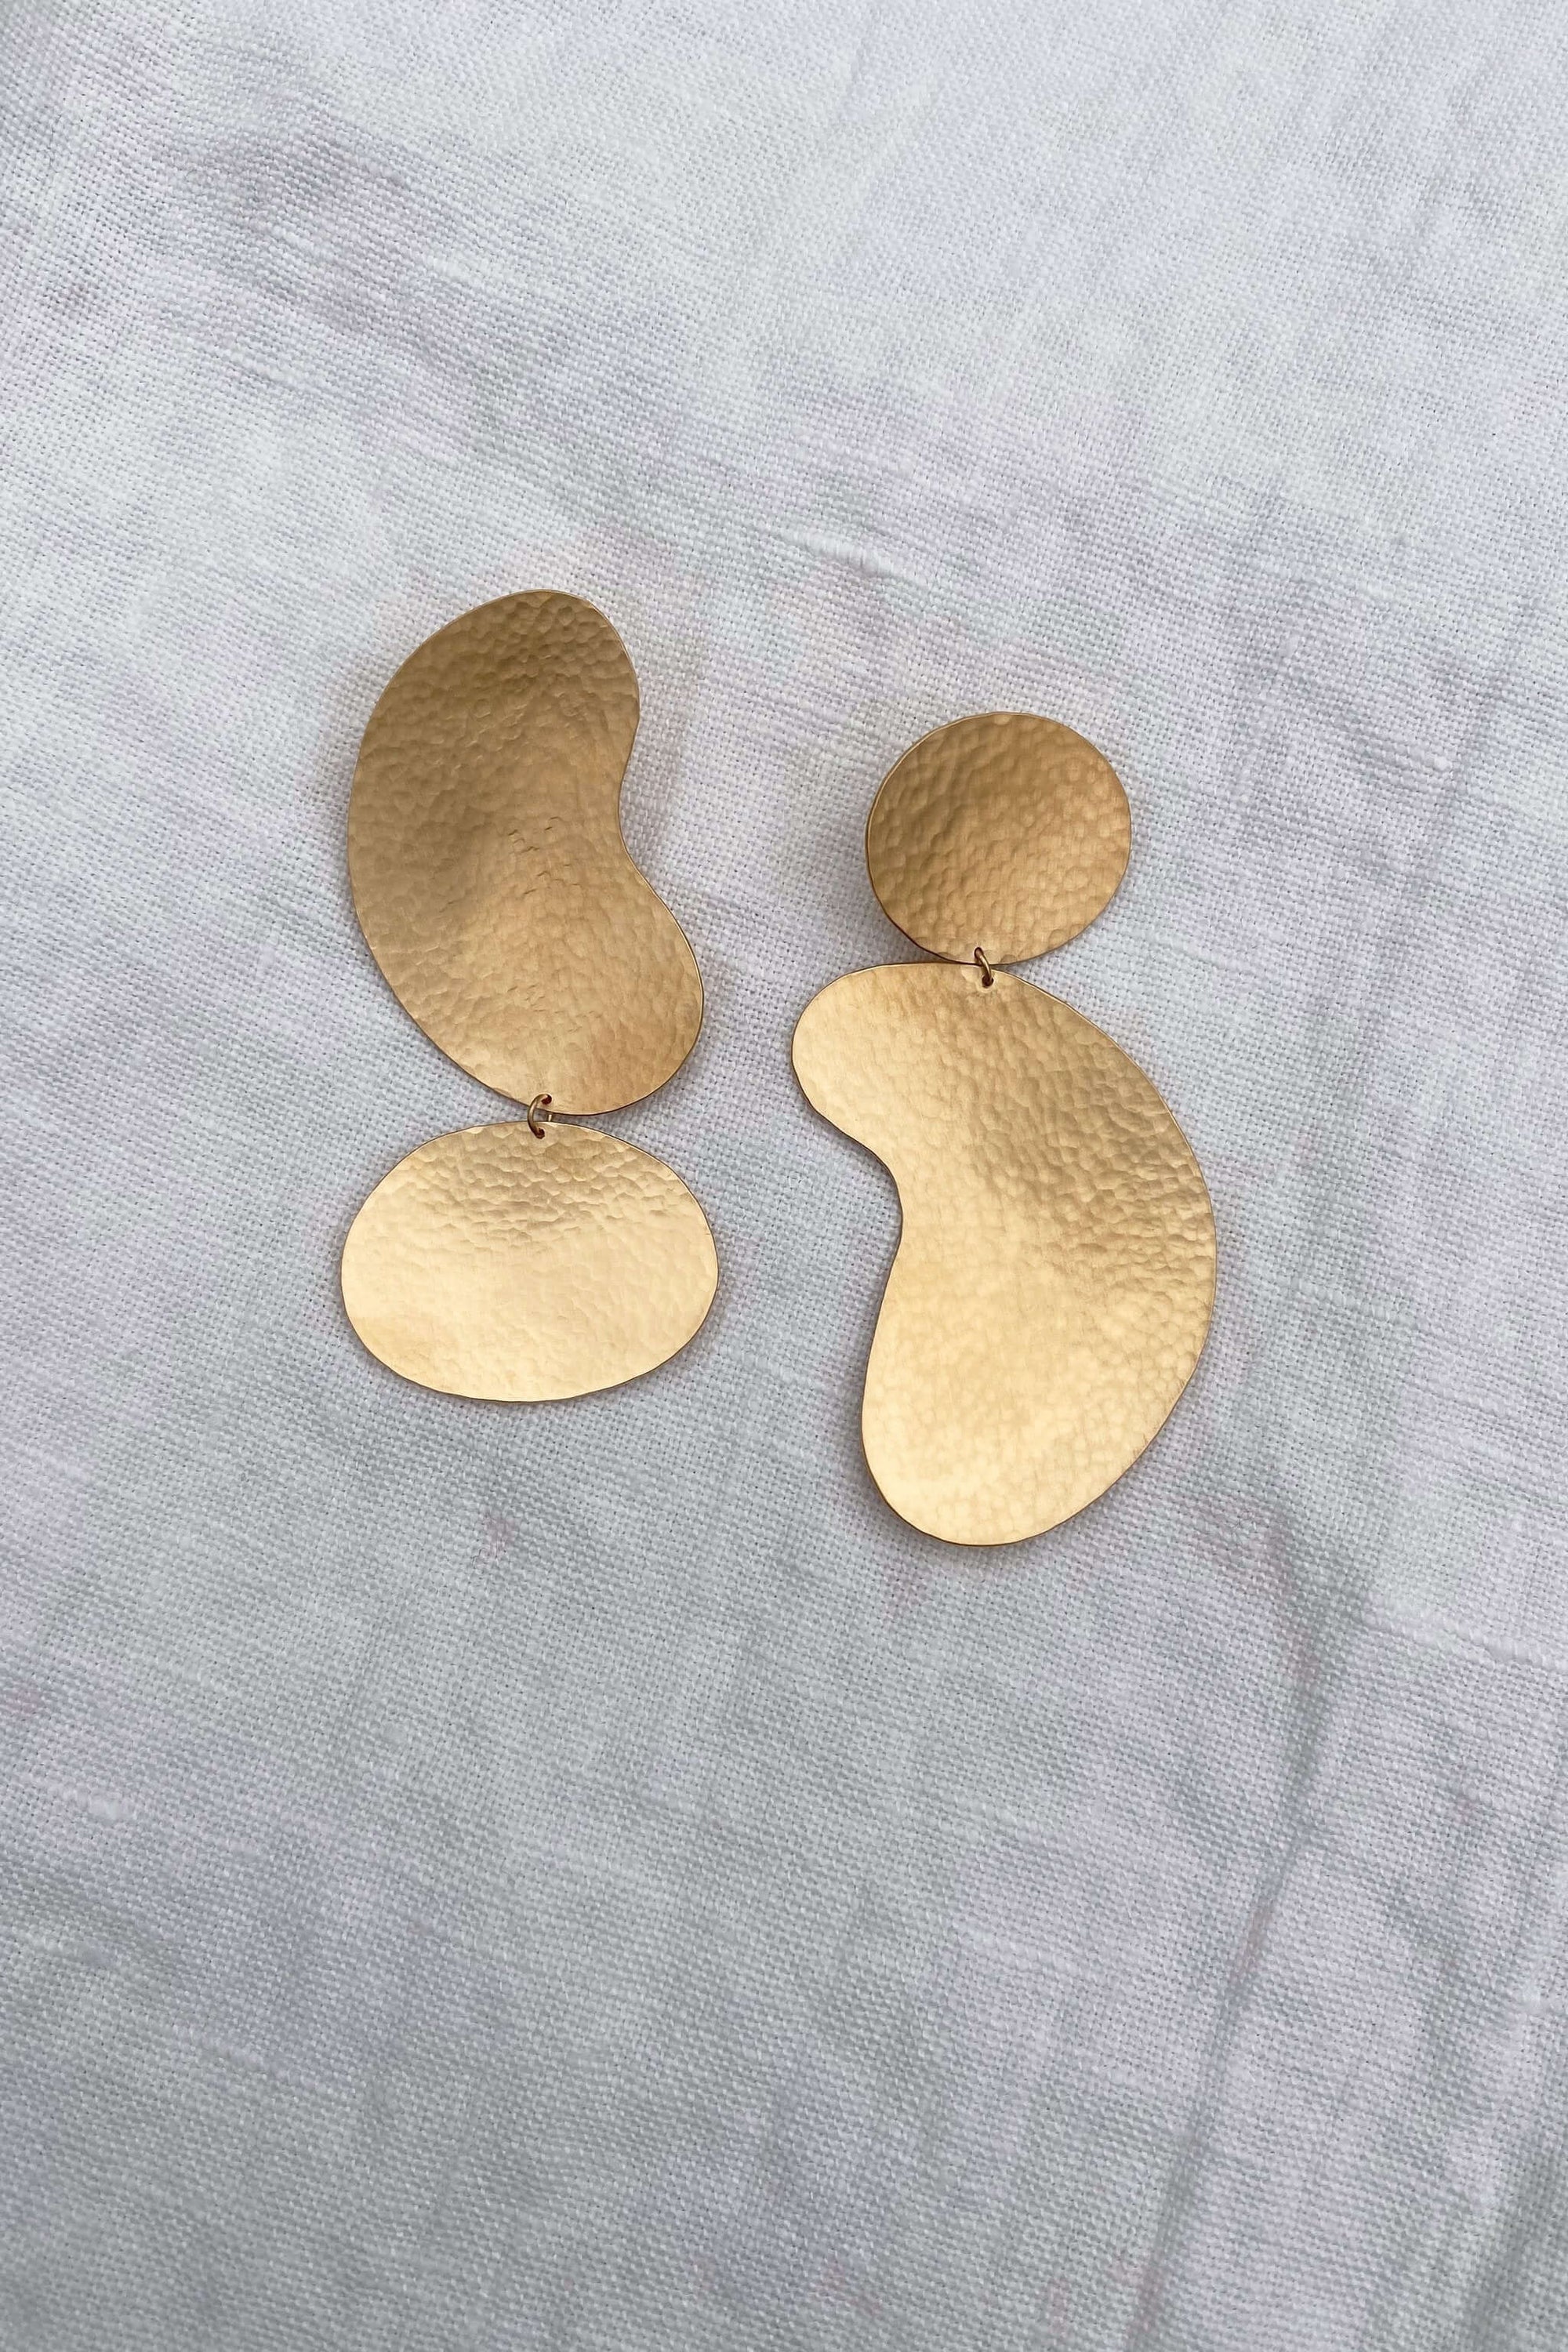 BAIUSHKI ANDAS duo earrings